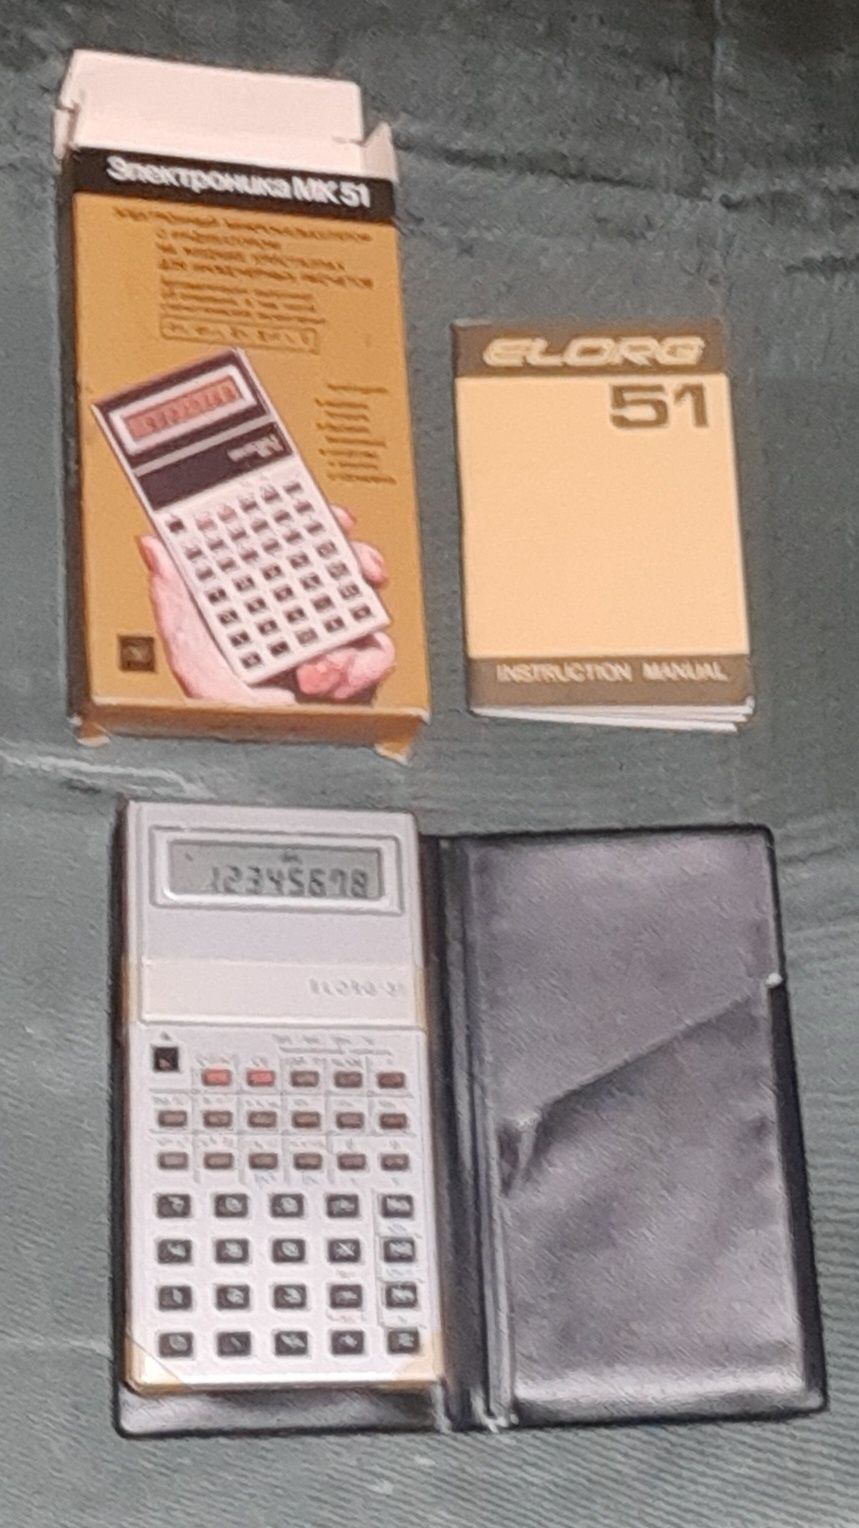 Kalkulator elgor 51